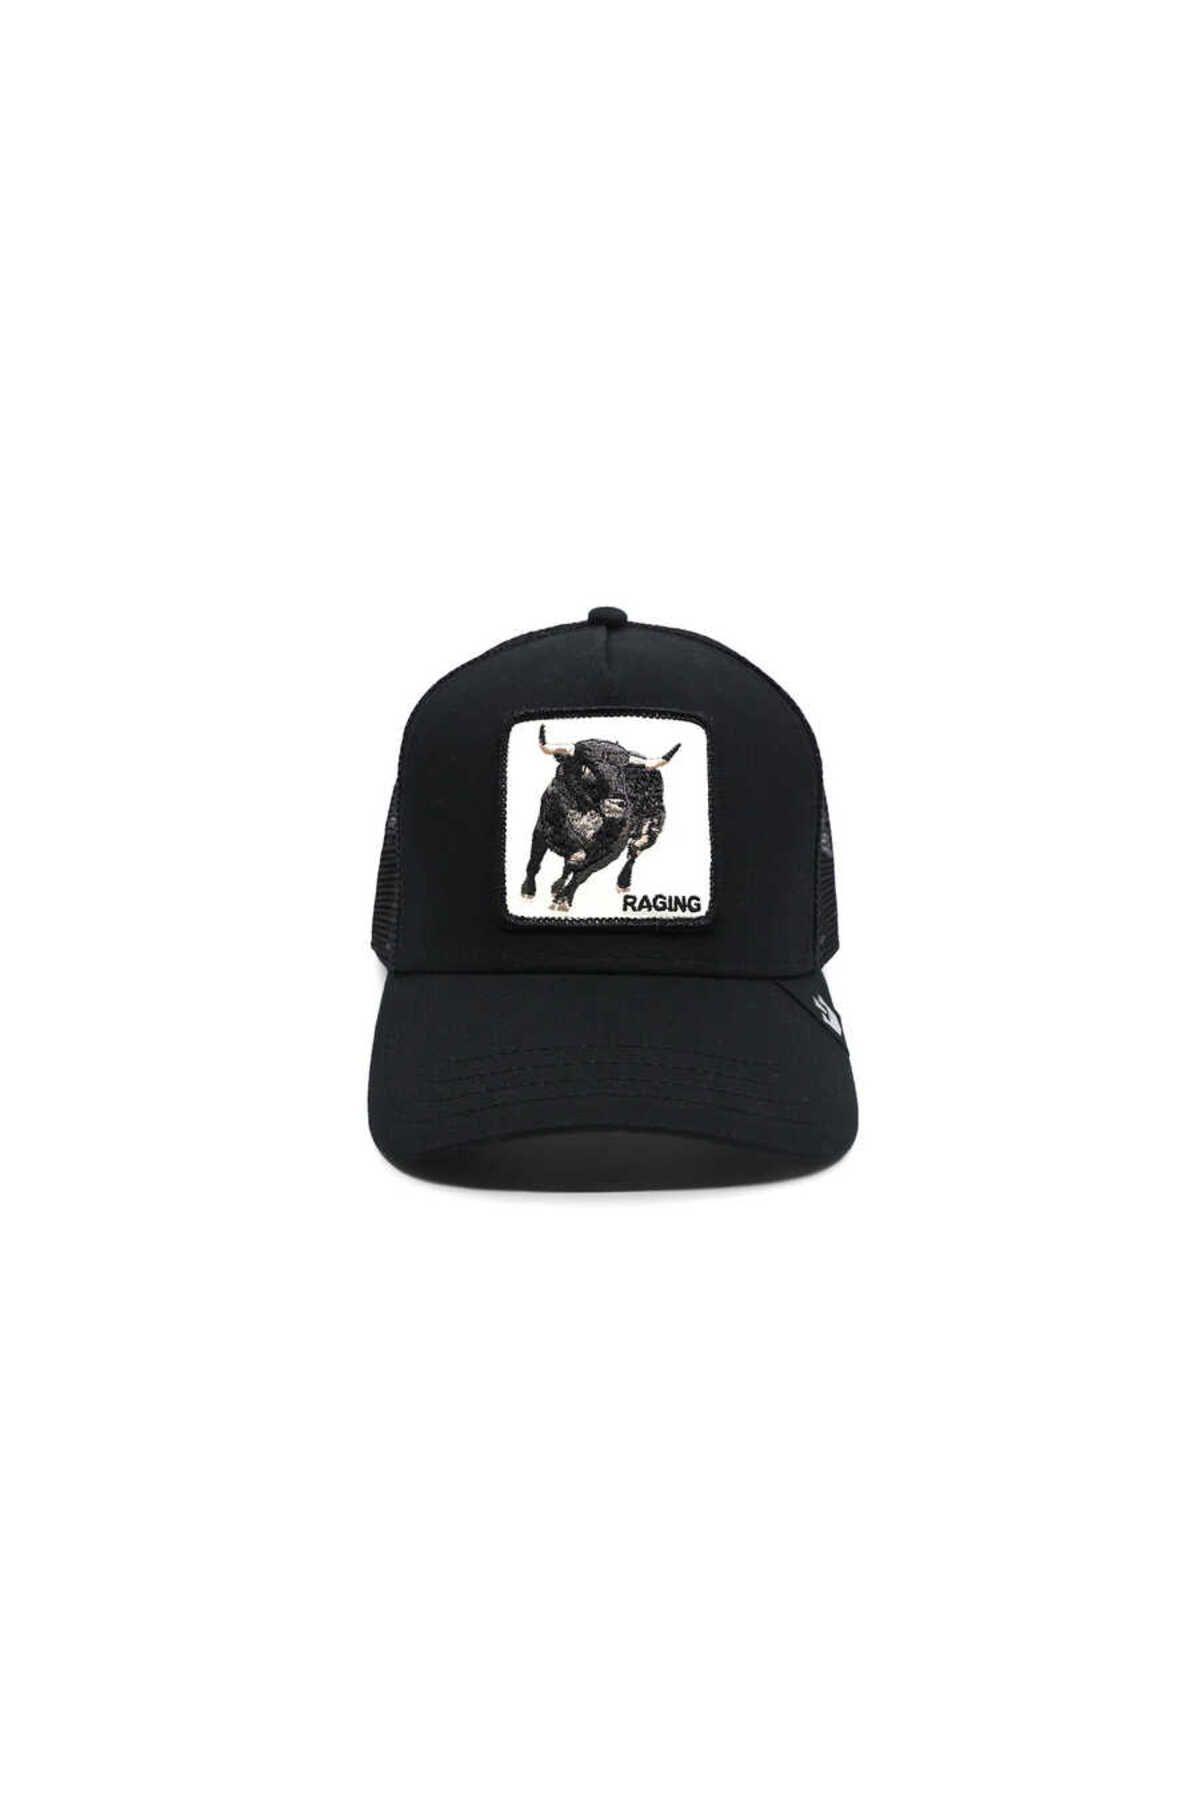 Goorin Bros Rager ( Boğa Figürlü) Şapka 101-0211 Siyah Standart